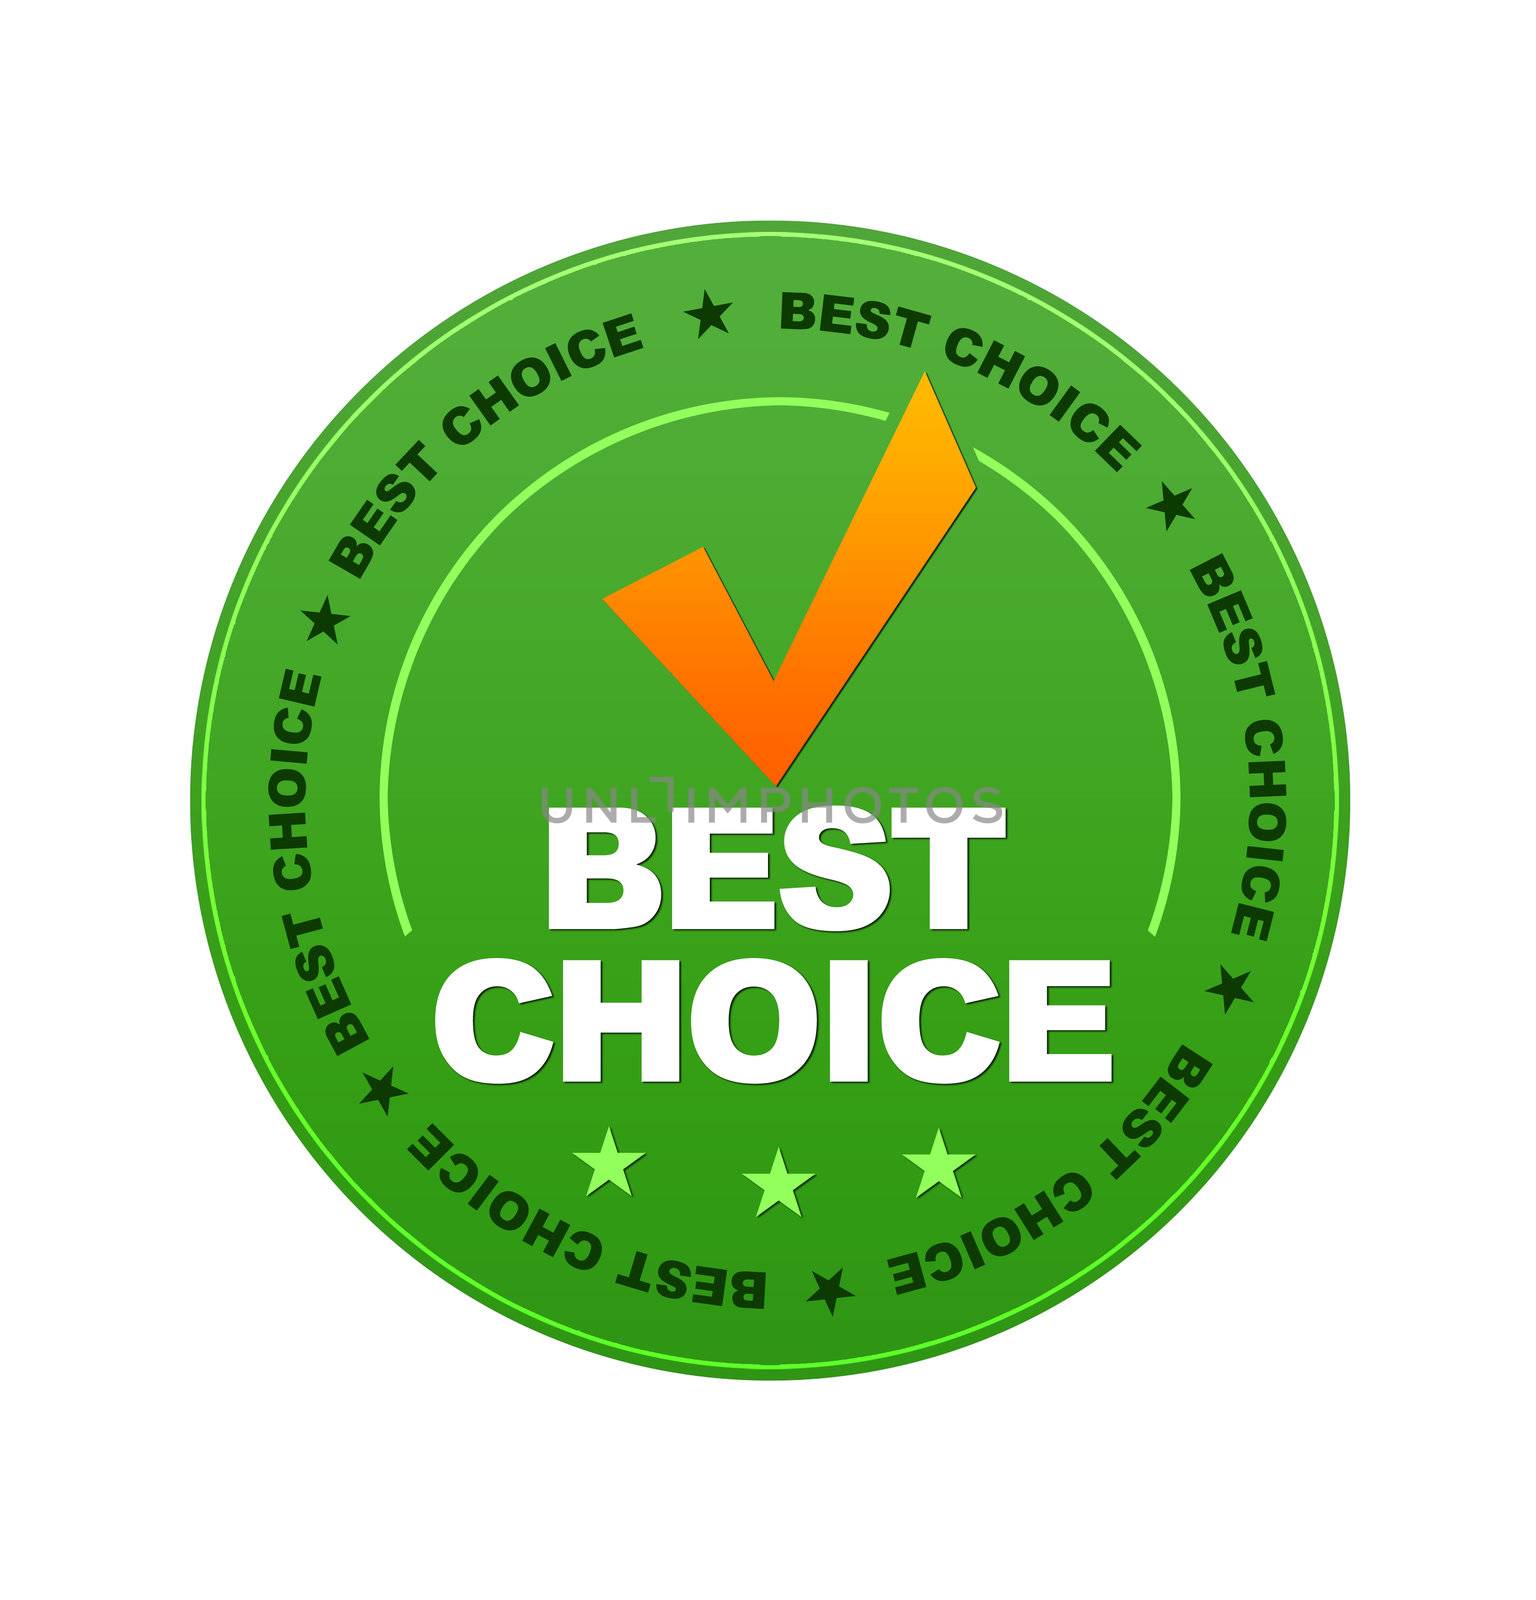 Best Choice by kbuntu